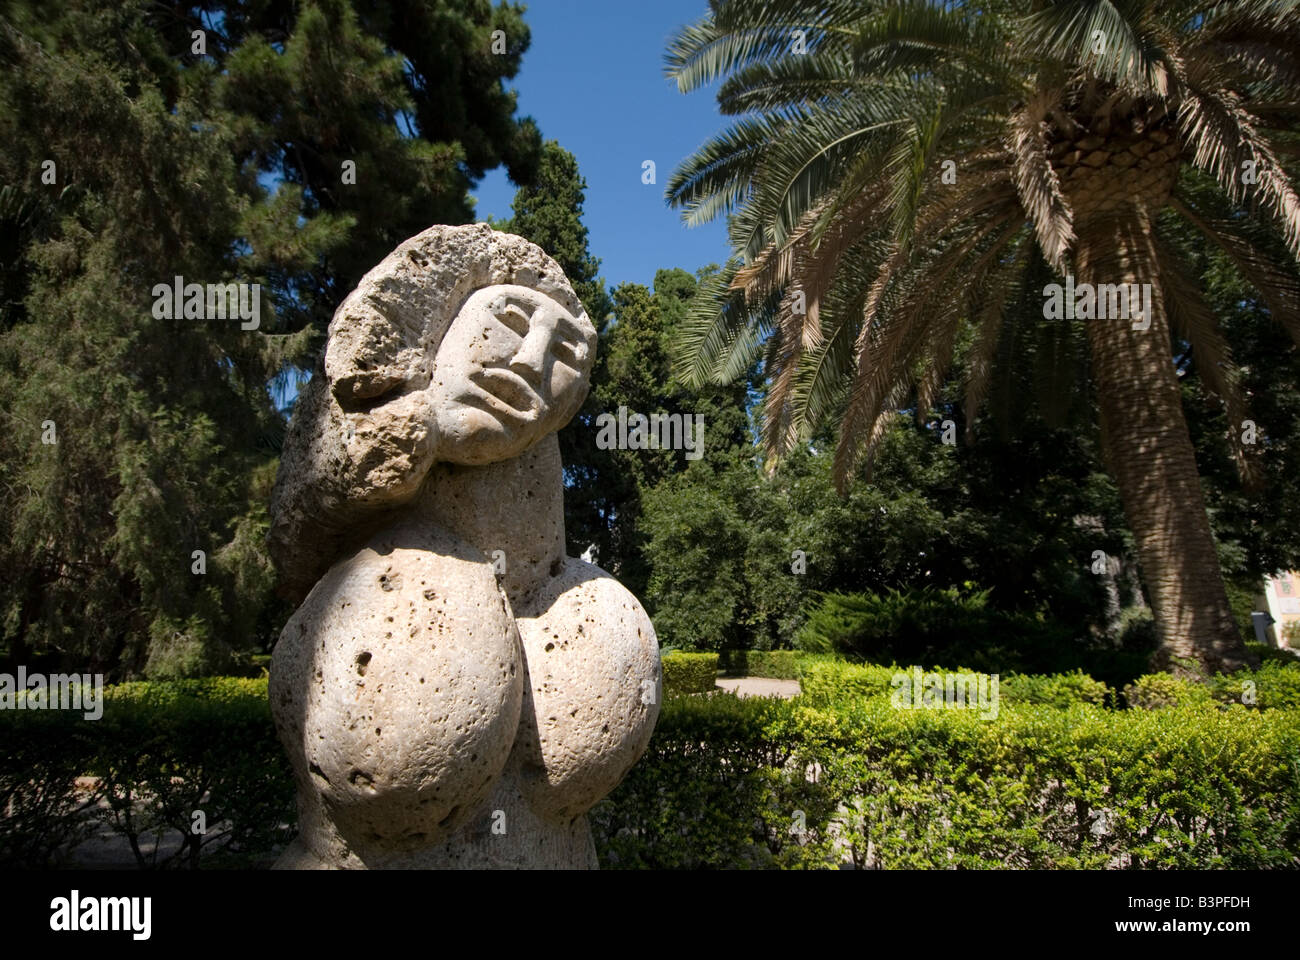 Art sculpture in the Botanical Garden or Botanic Jardi in Valencia Spain Stock Photo